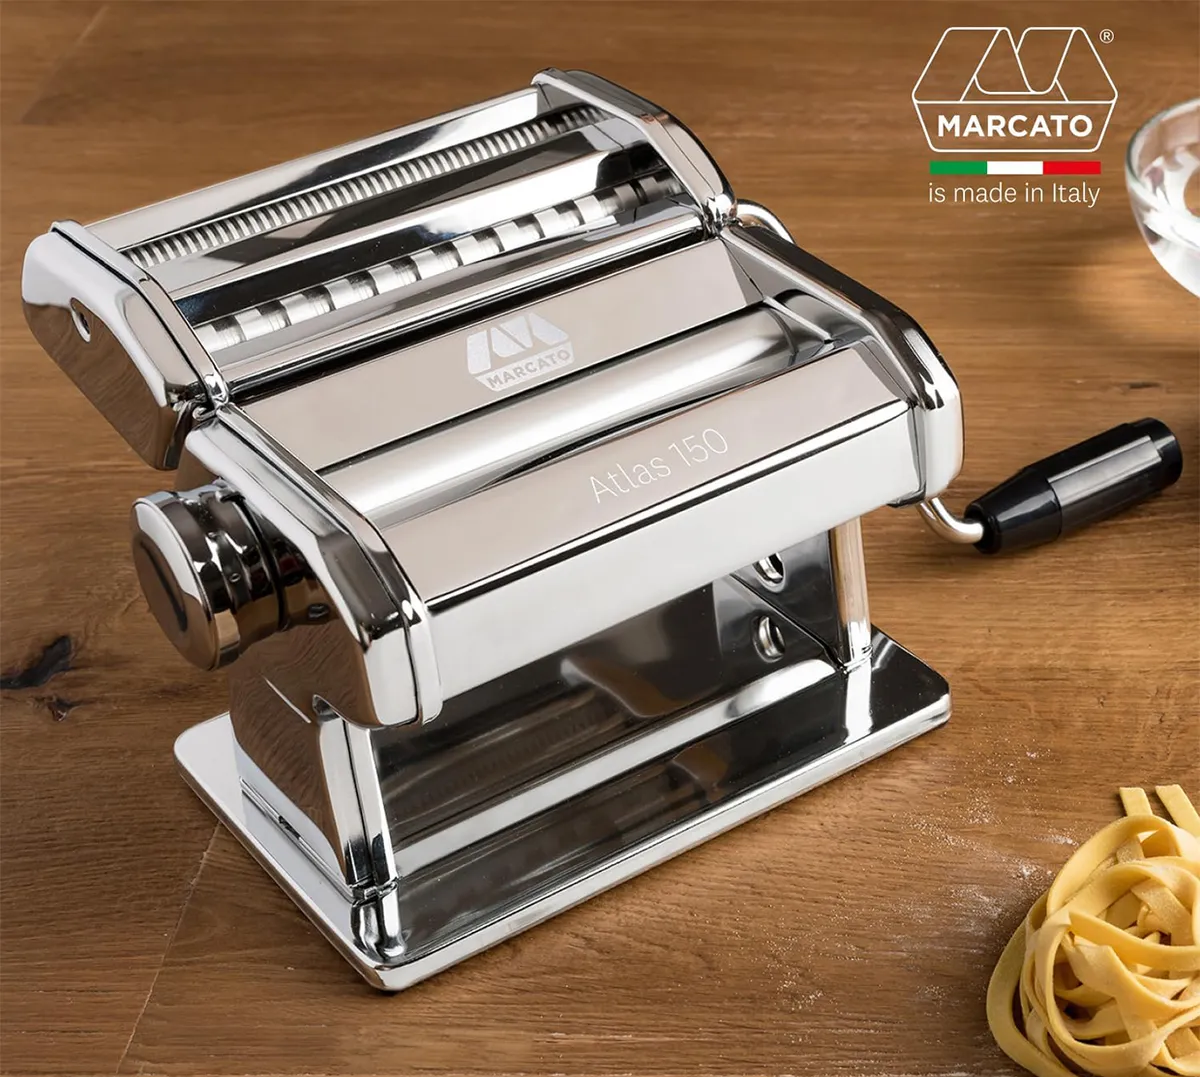  GOOG Craft Pasta Machine for Polymer Clay & Soft Metal